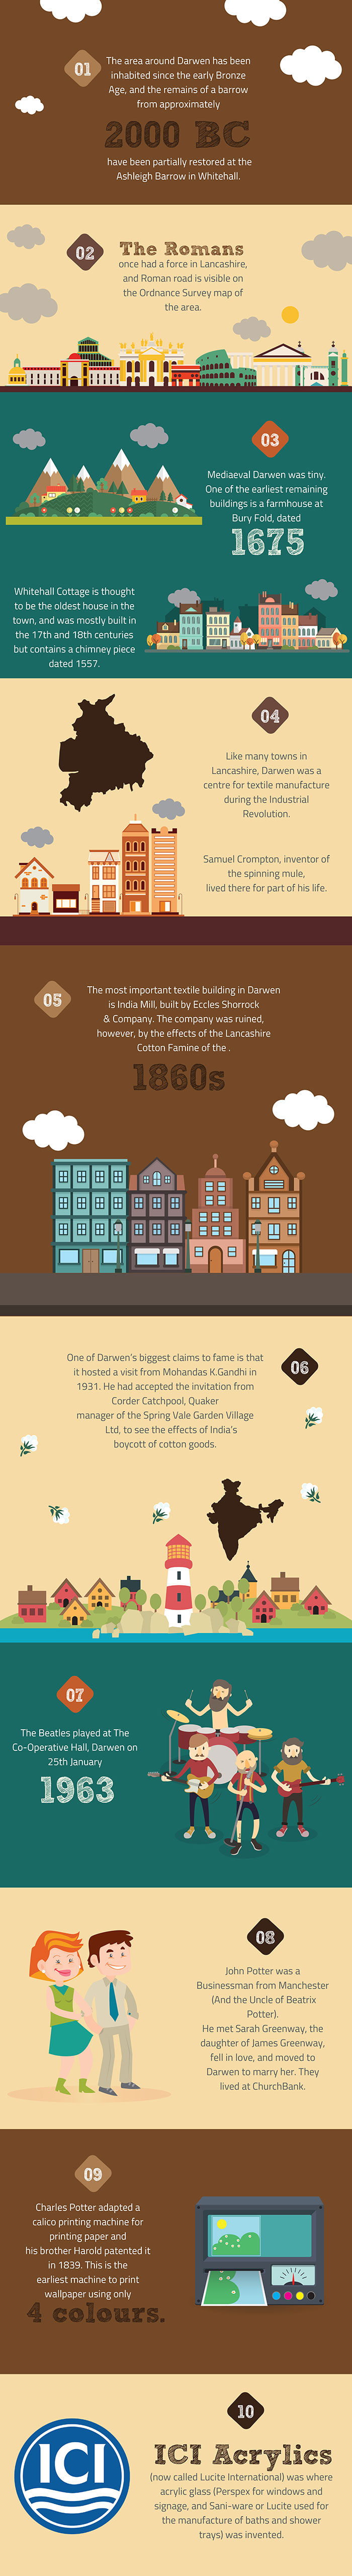 10 Facts About Darwen Town